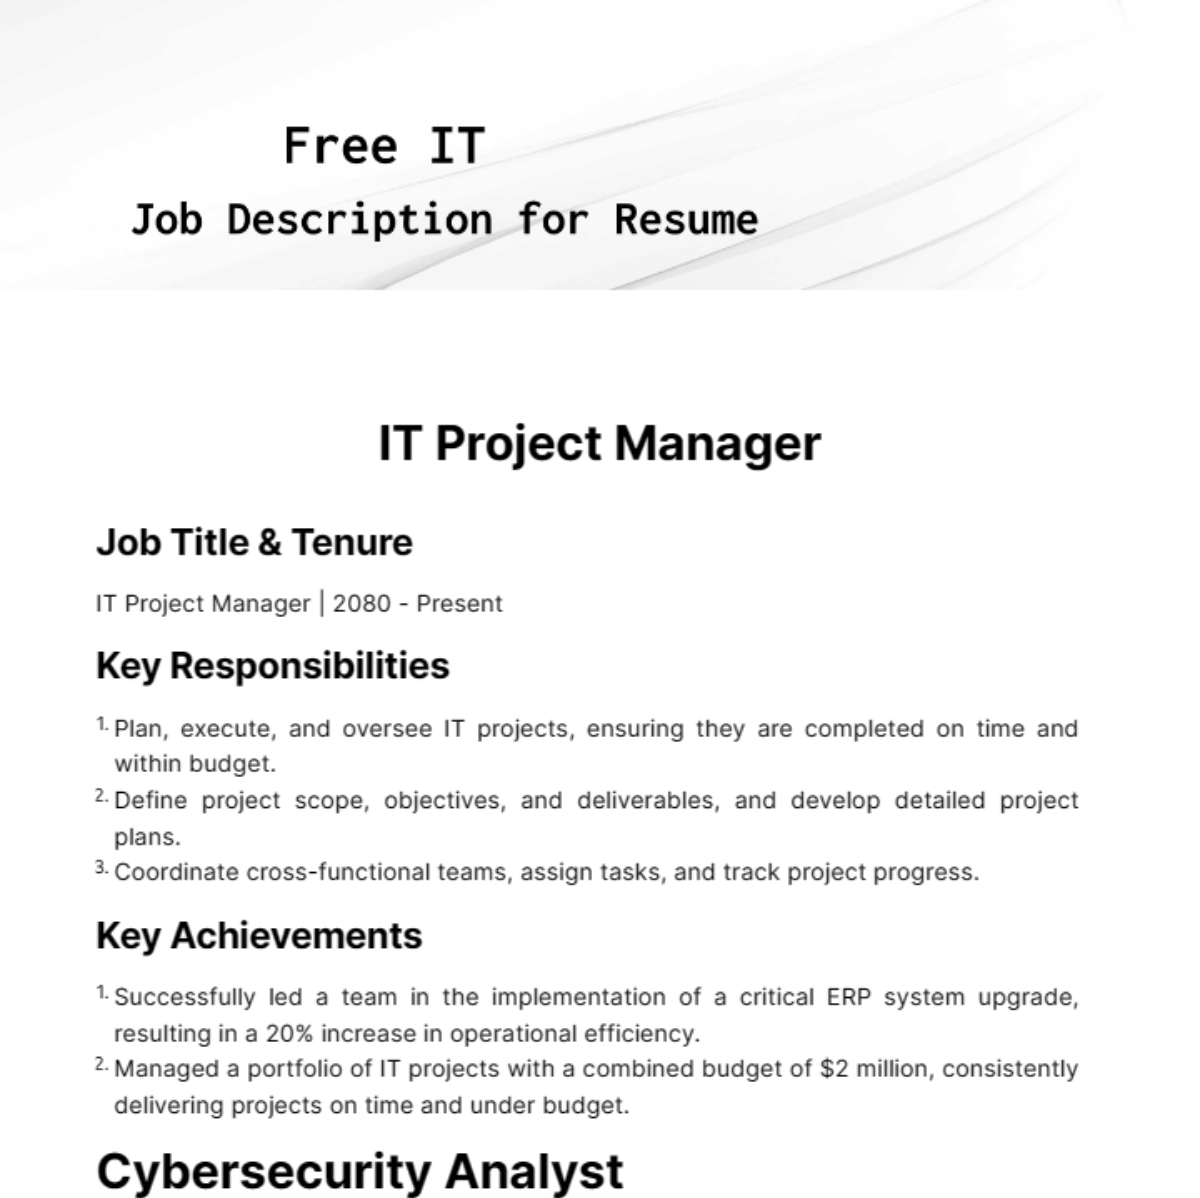 Free IT Job Description for Resume Template